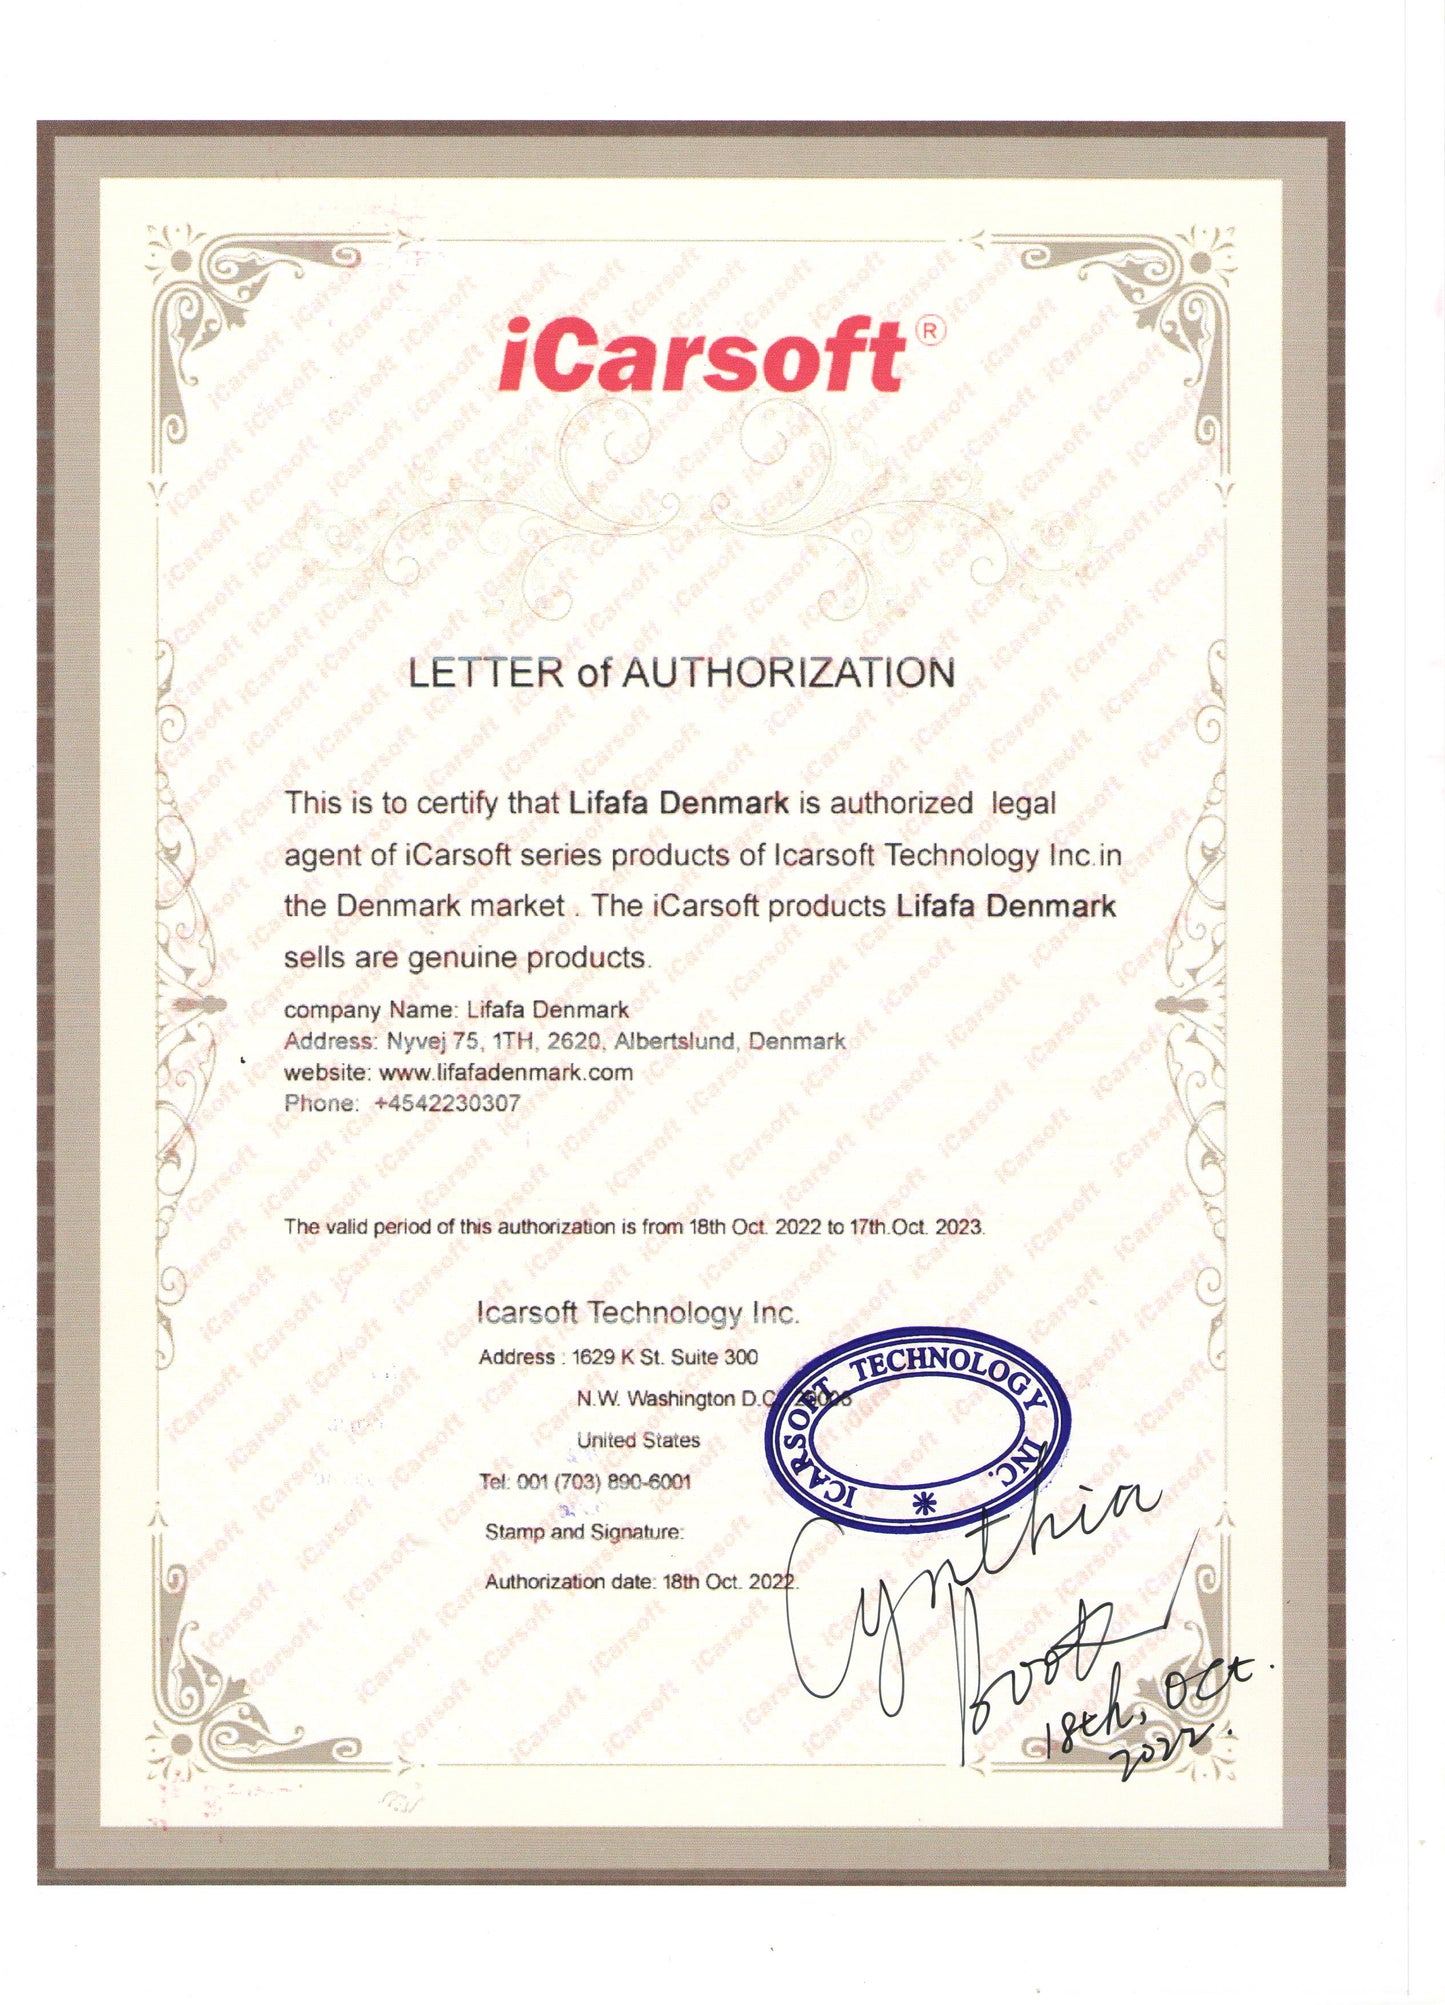 iCarsoft LR V3.0 - For LAND ROVER, JAGUAR  Professional Diagnostic Tool + Extra Features